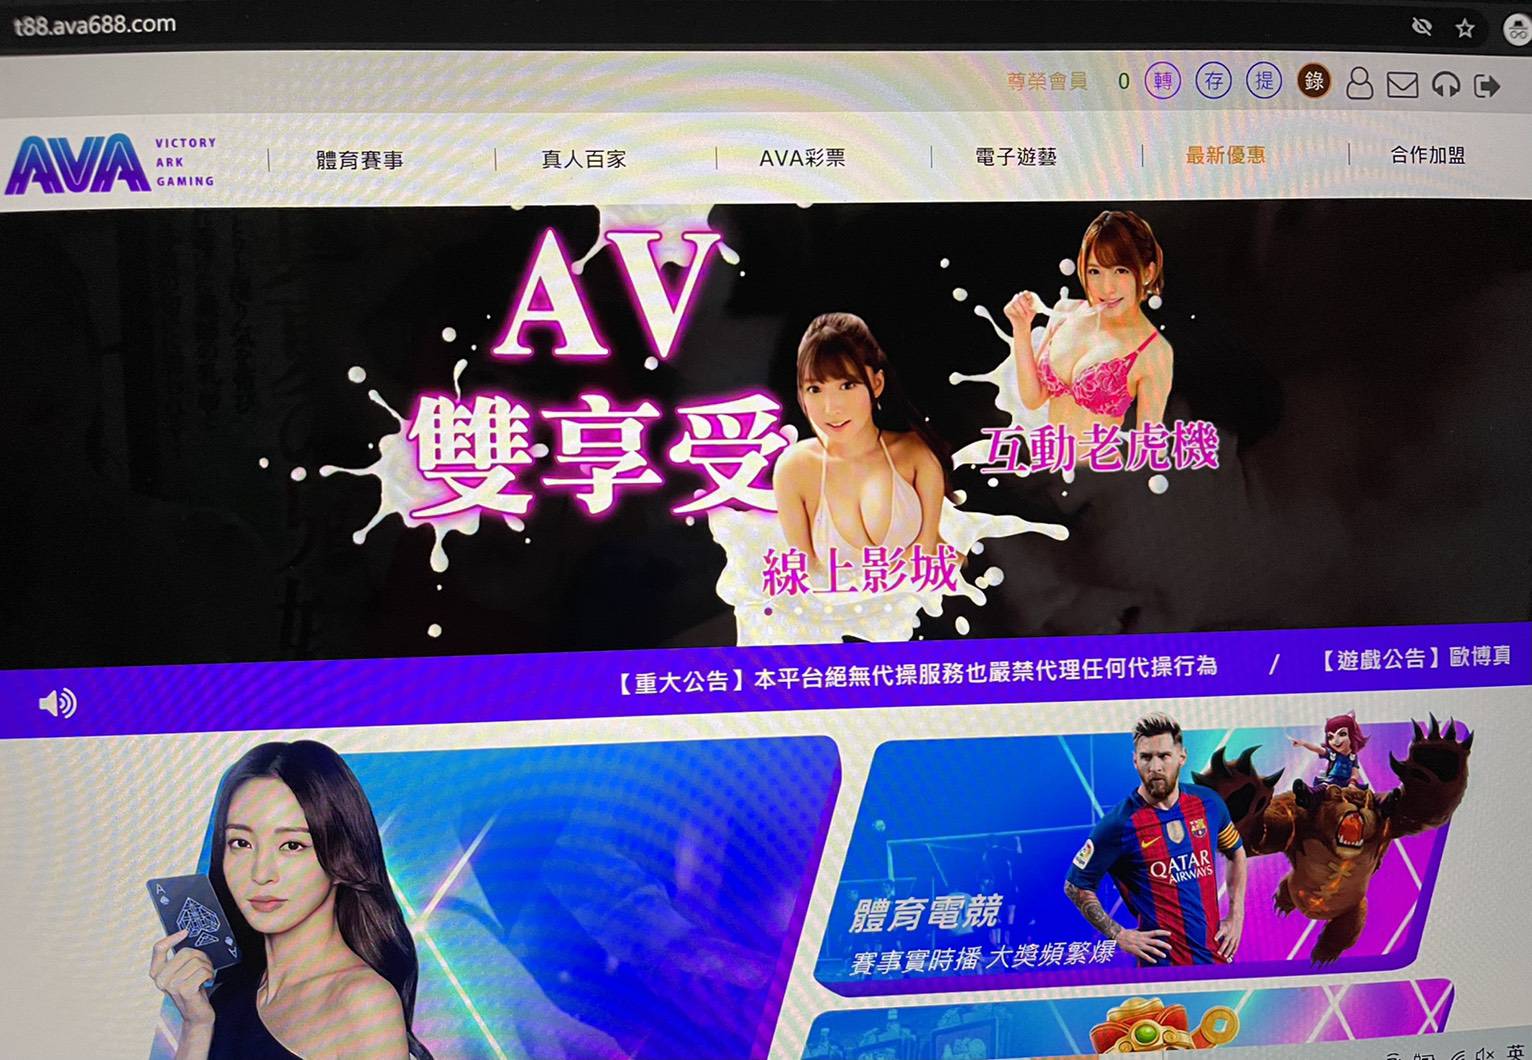 AVA娛樂城，詐騙黑網，贏錢不出金，亞洲第一唬爛博弈平台（附圖）